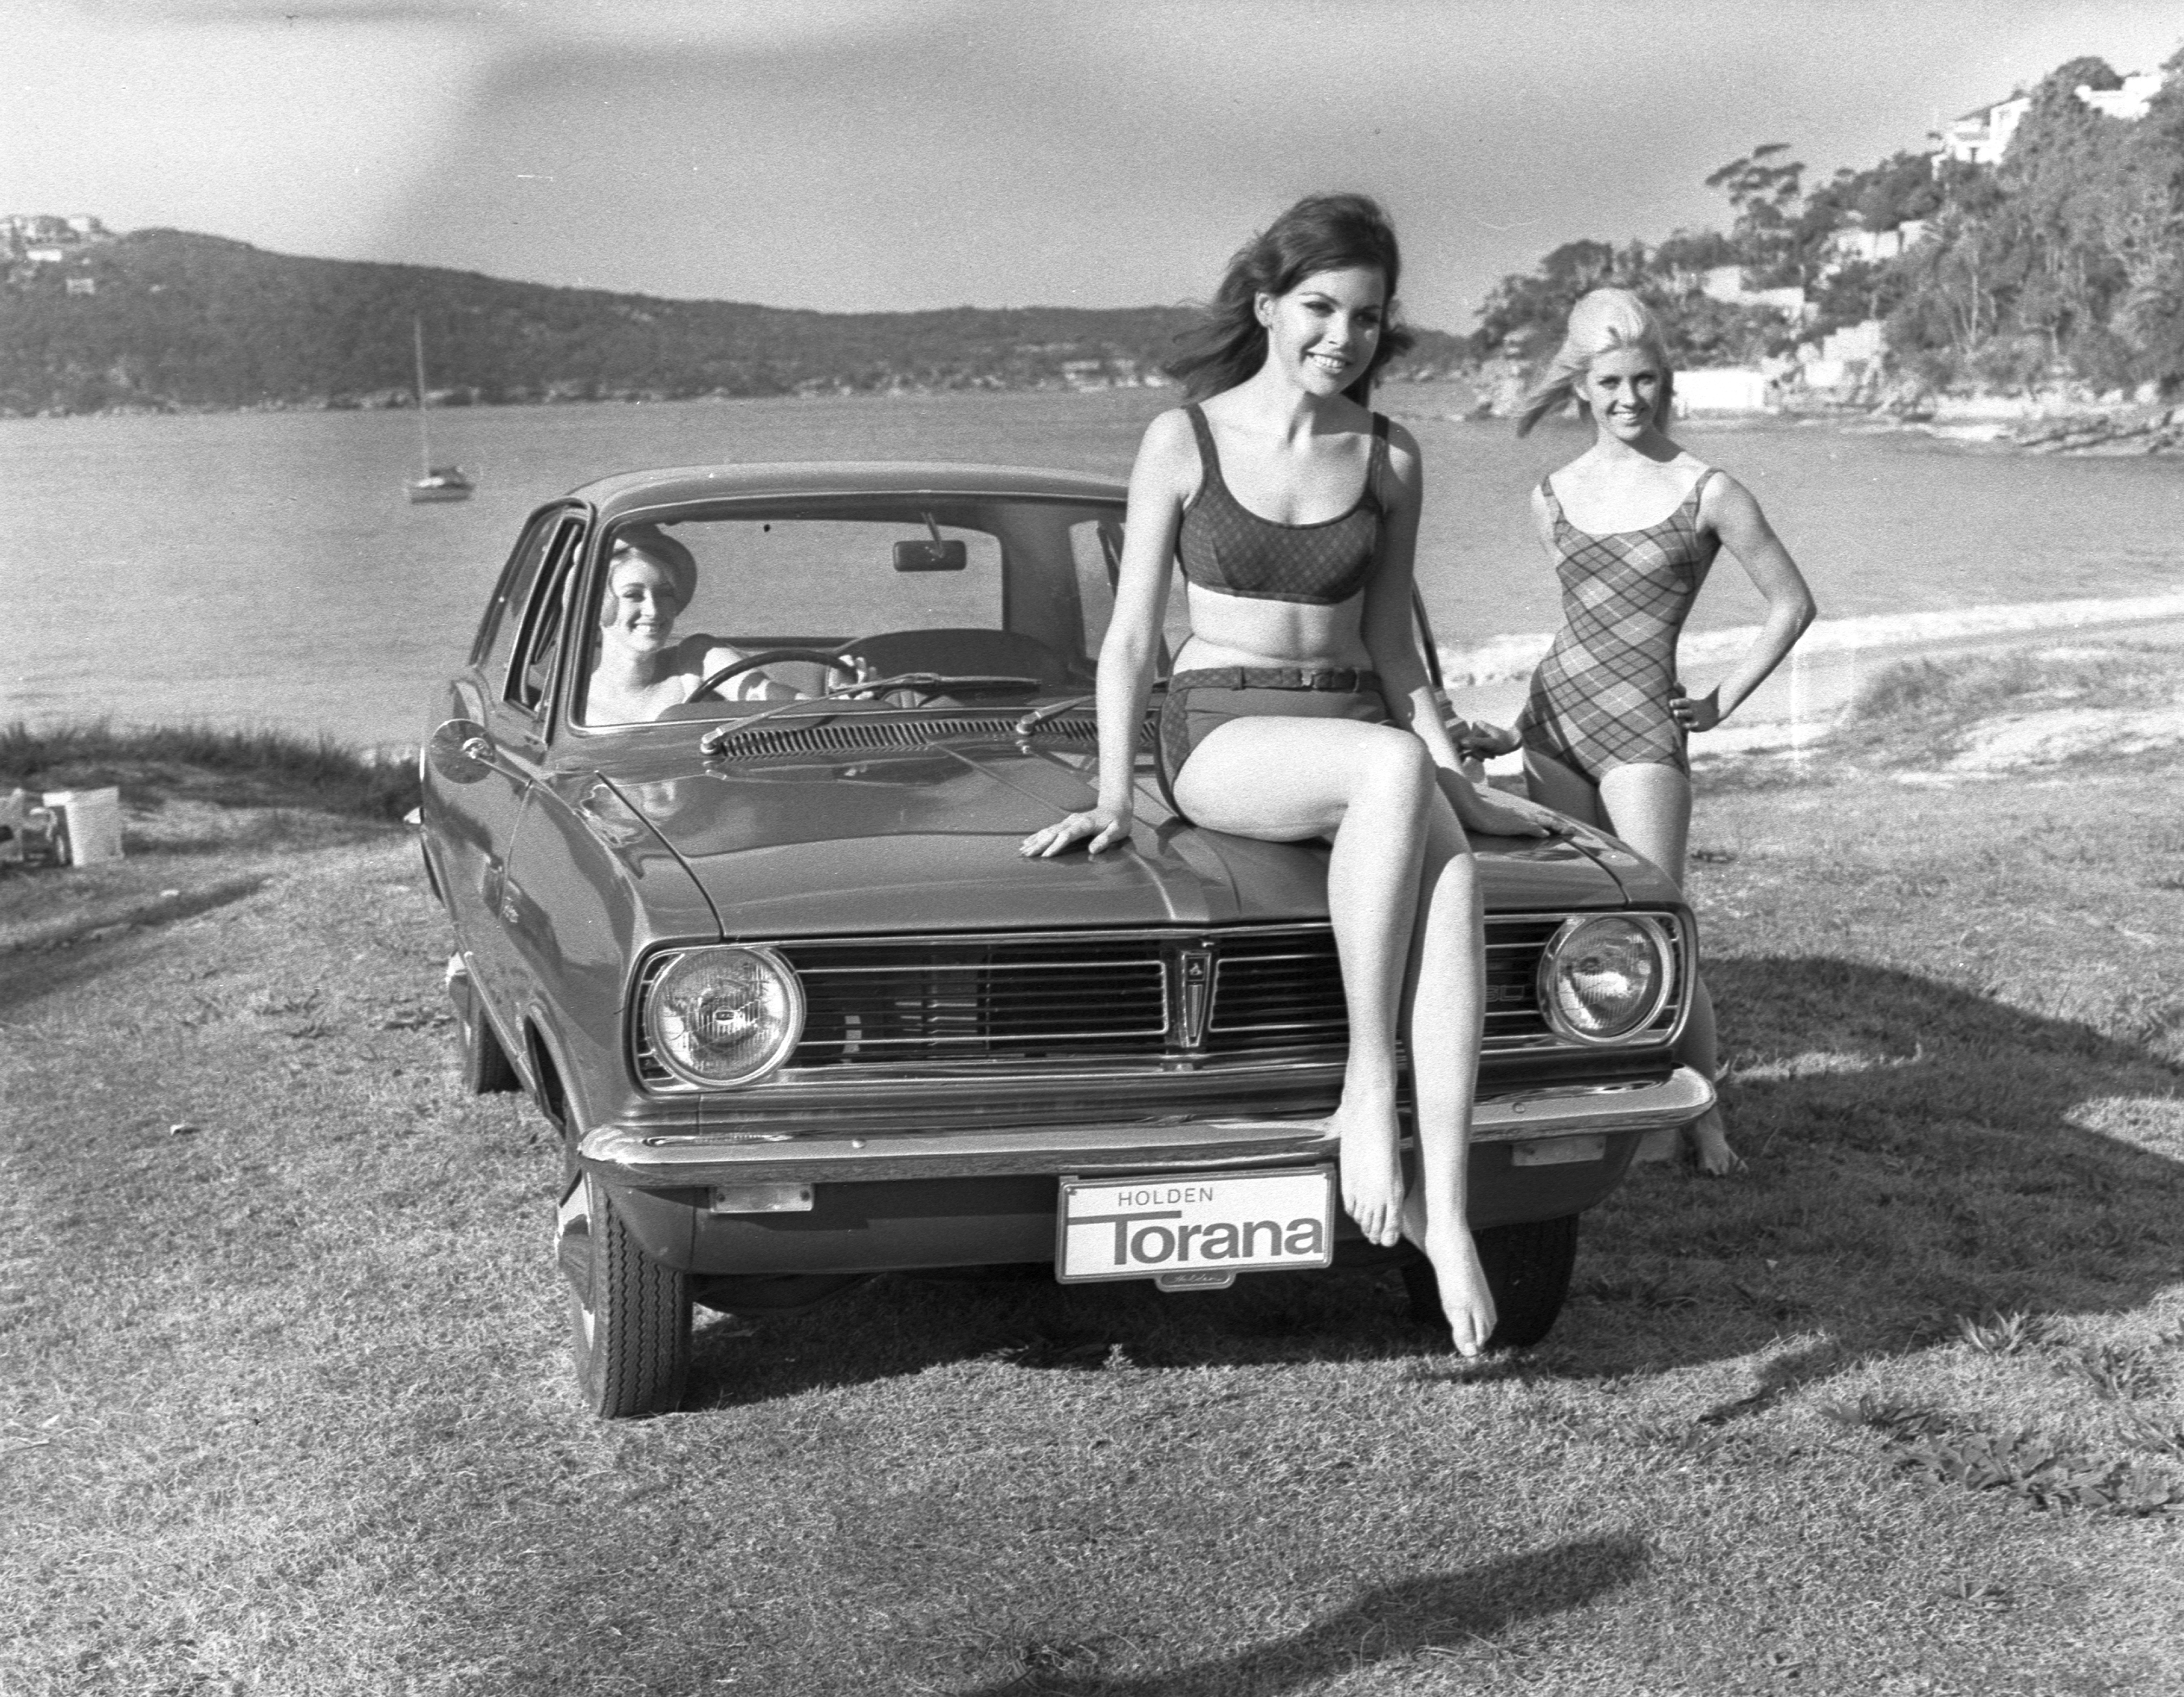 Jantzen women's swimsuits for 1967 modelled at Chinamans Beach alongside the latest-model Holden Torana